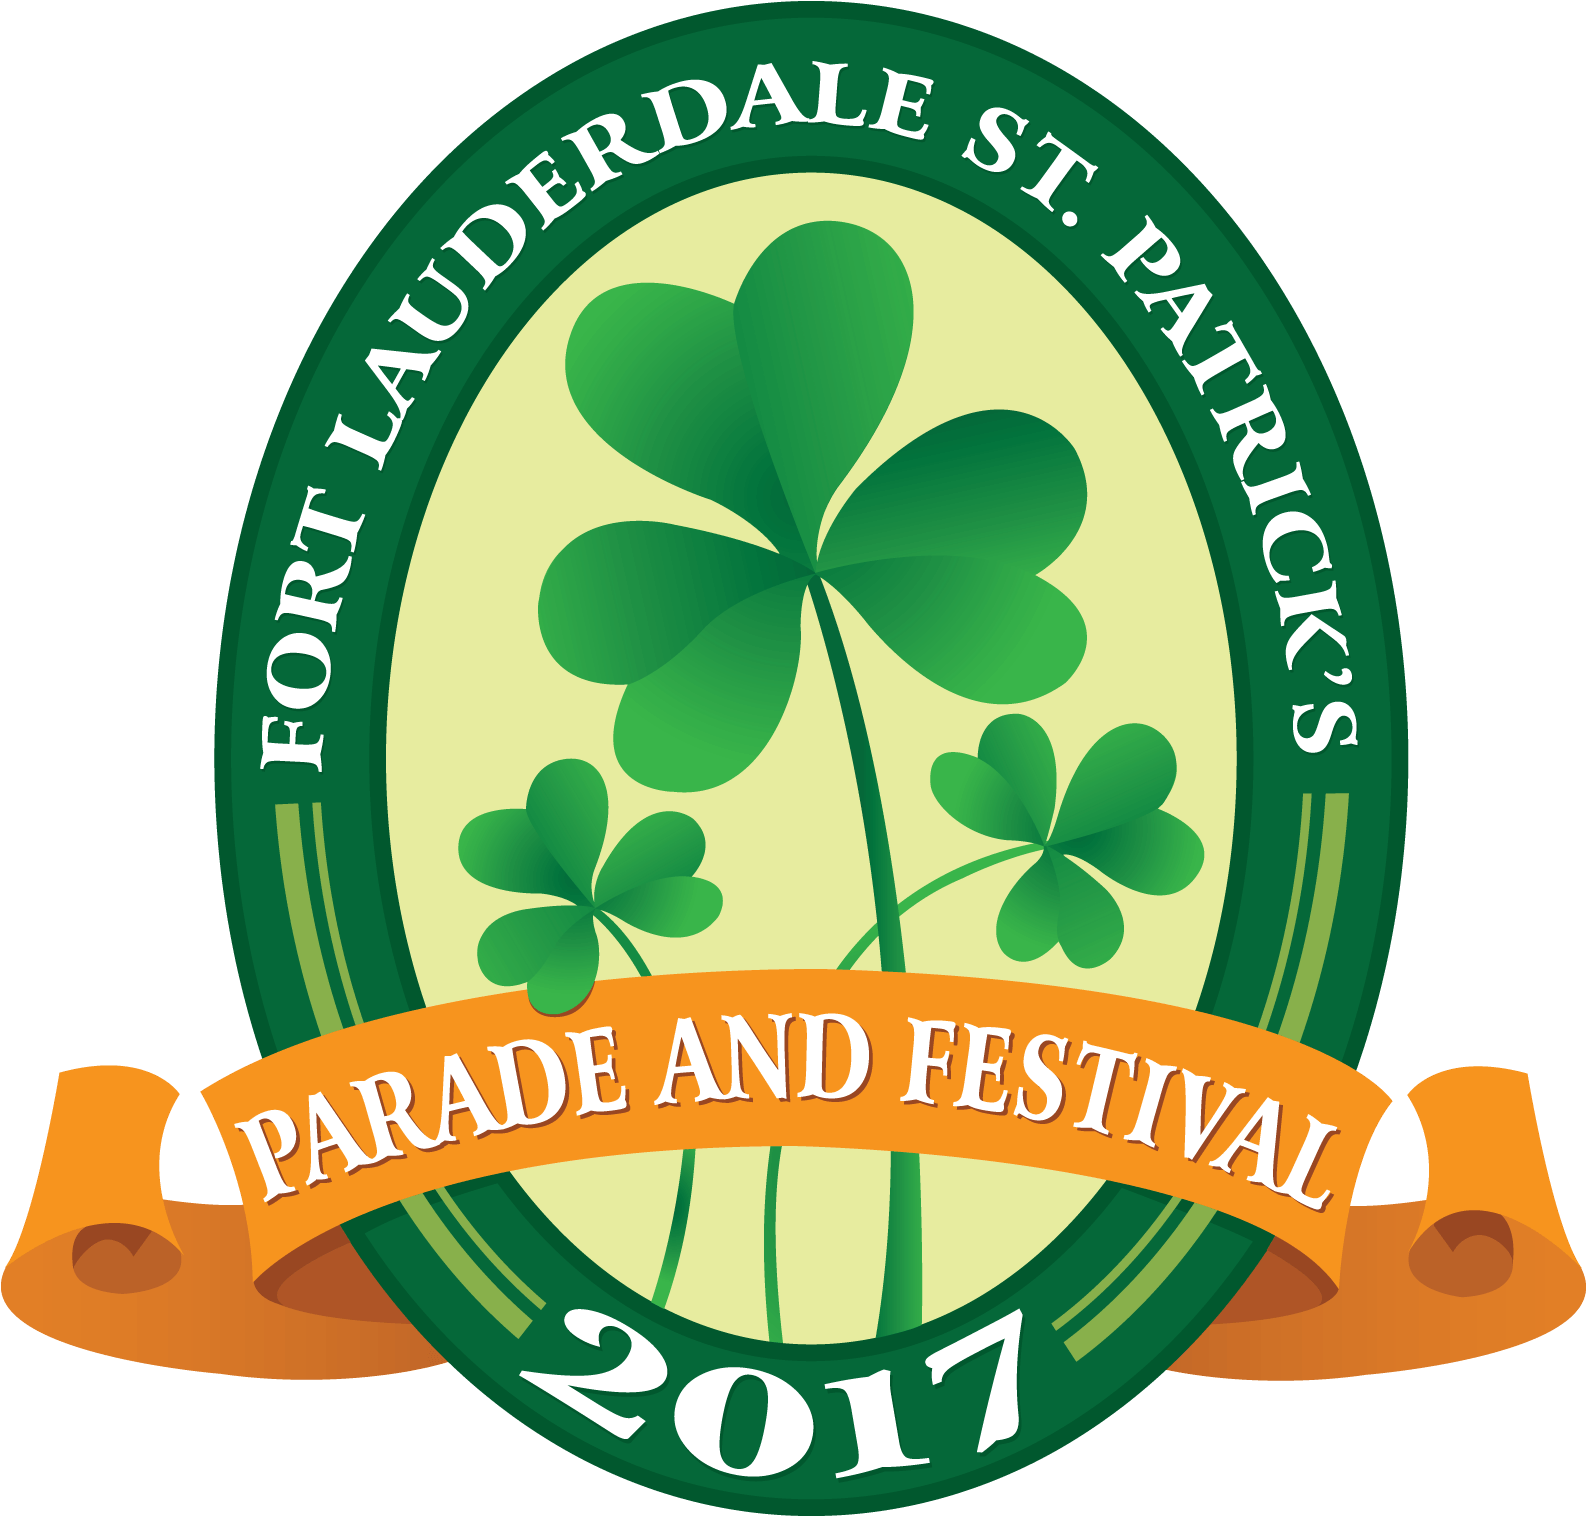 Fort Lauderdale St Patricks Parade Festival2017 Logo PNG